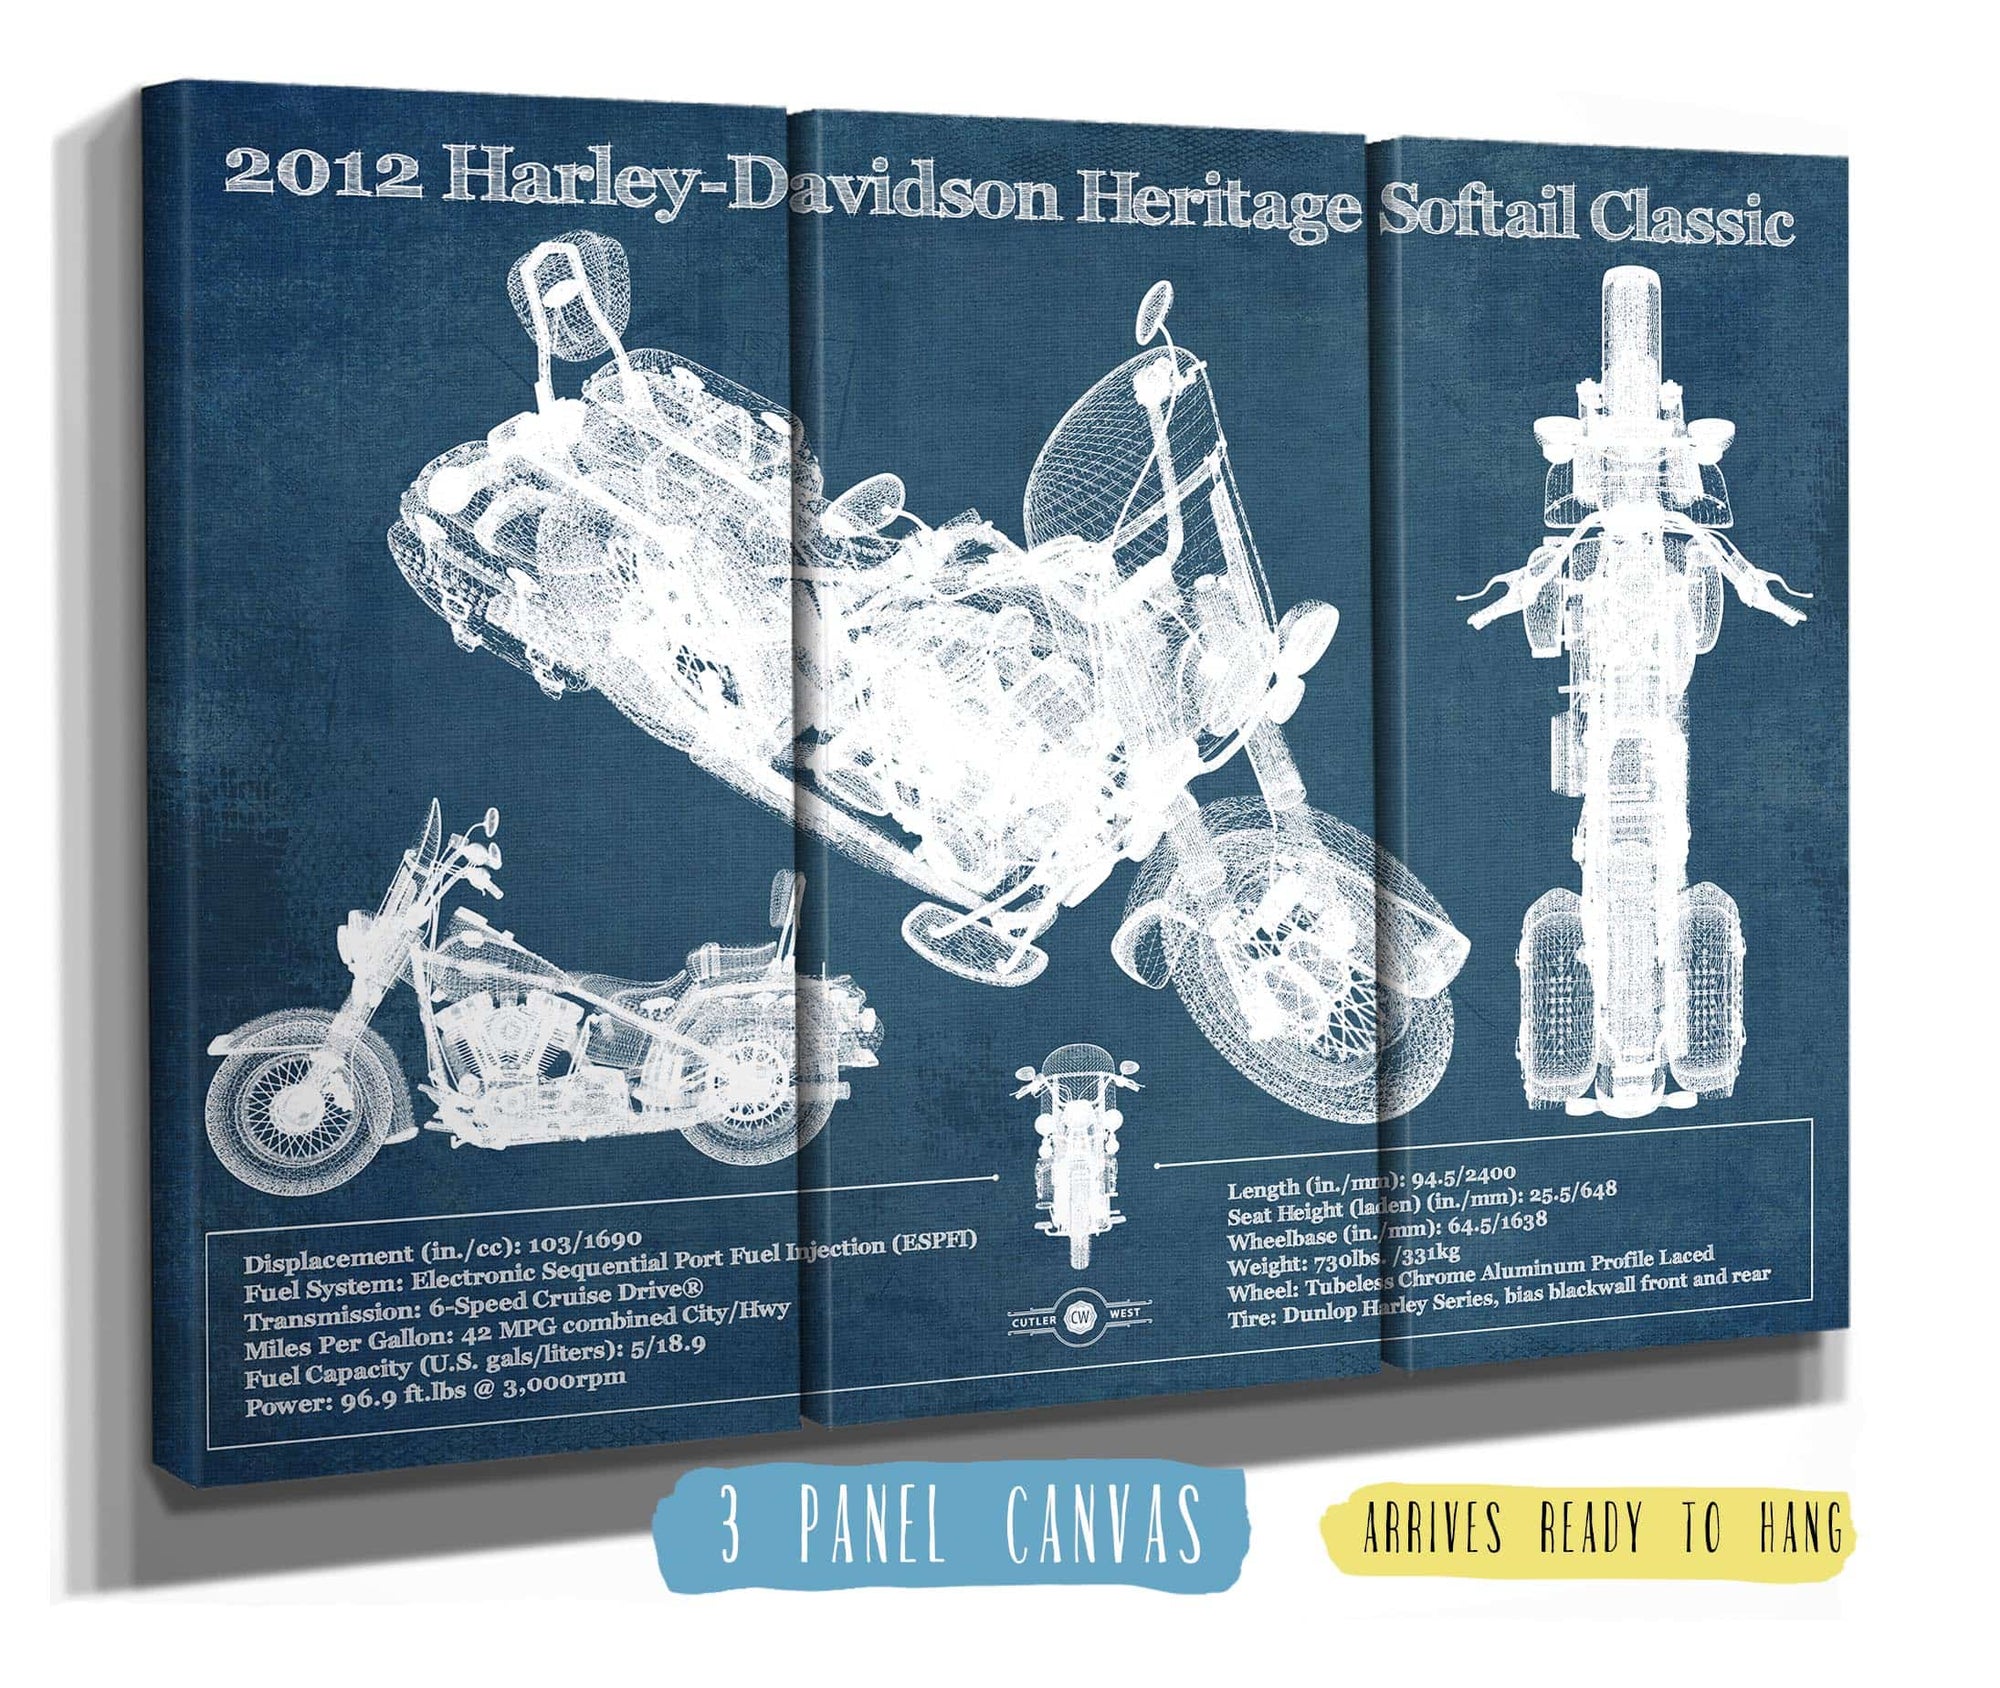 Cutler West Harley Davidson Heritage Softail Classic 2012 Blueprint Vintage Motorcycle Print